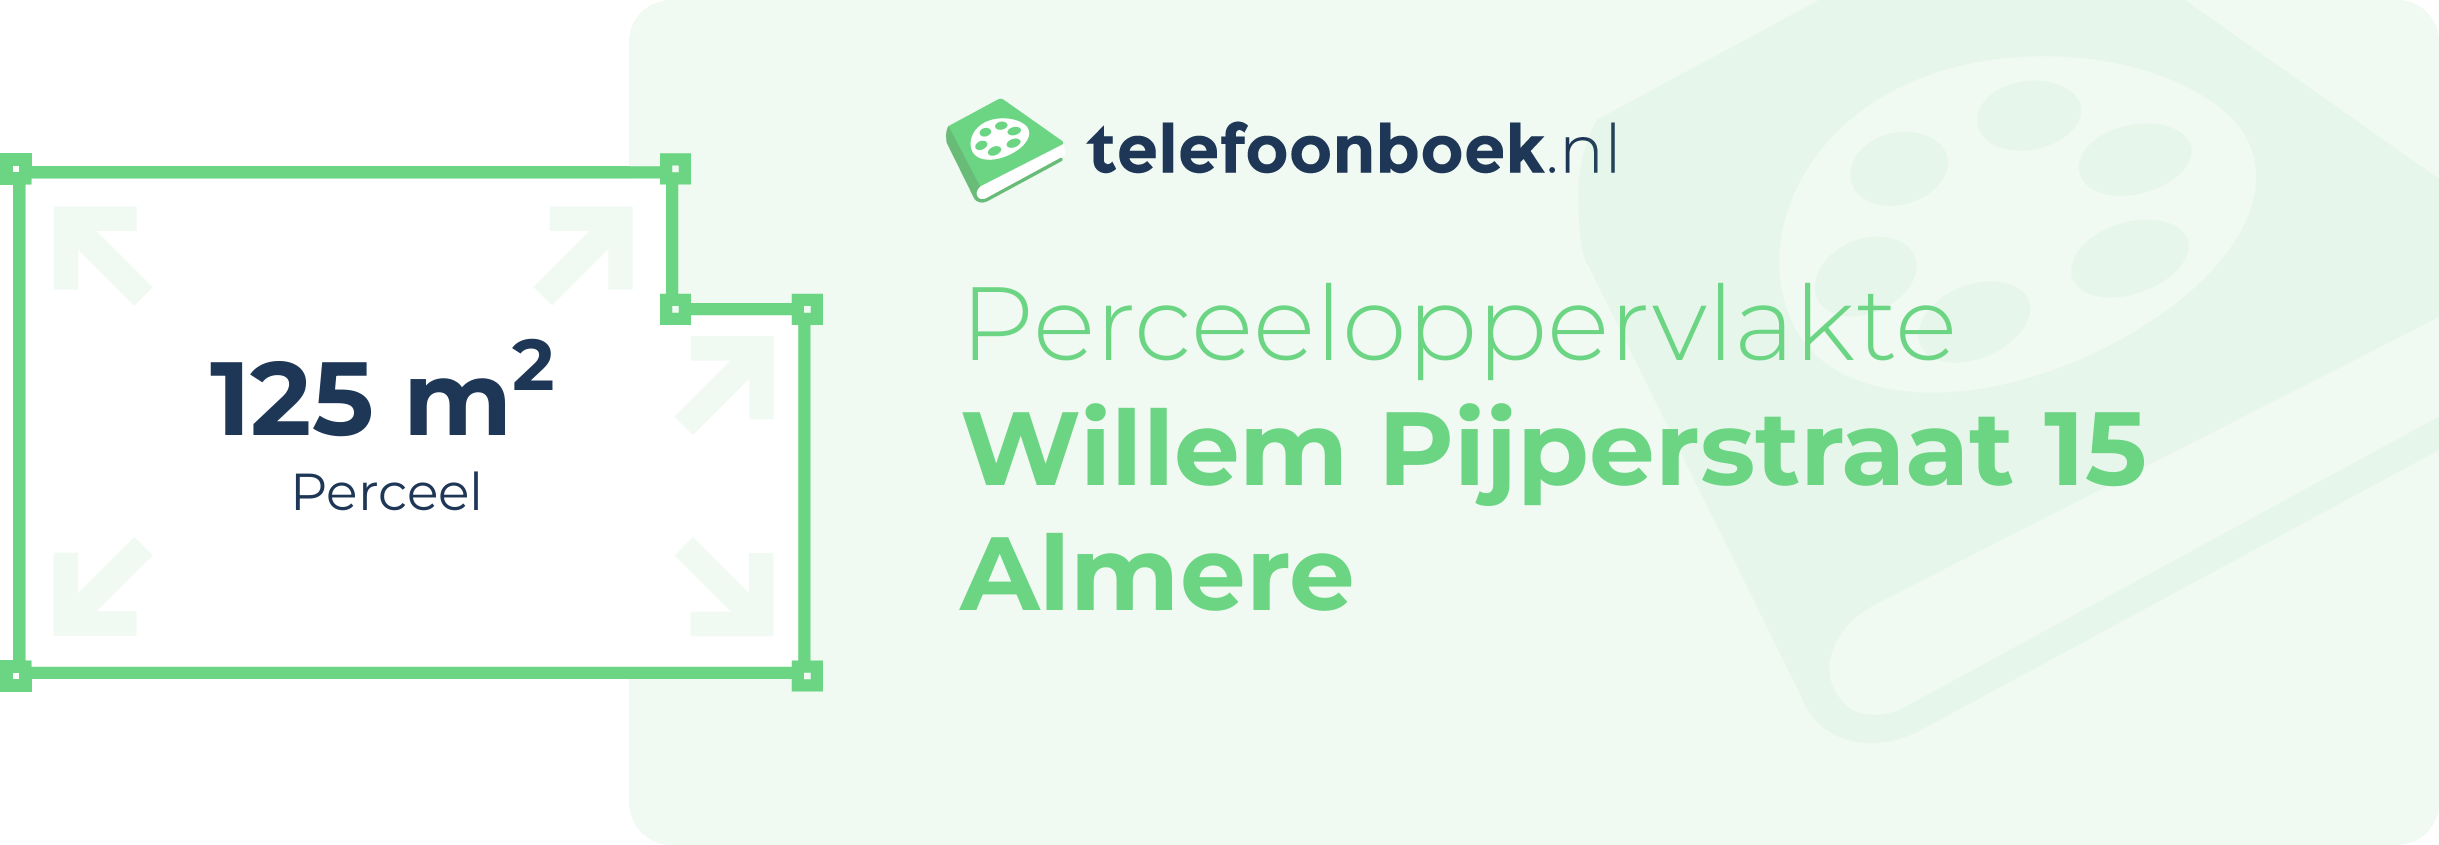 Perceeloppervlakte Willem Pijperstraat 15 Almere